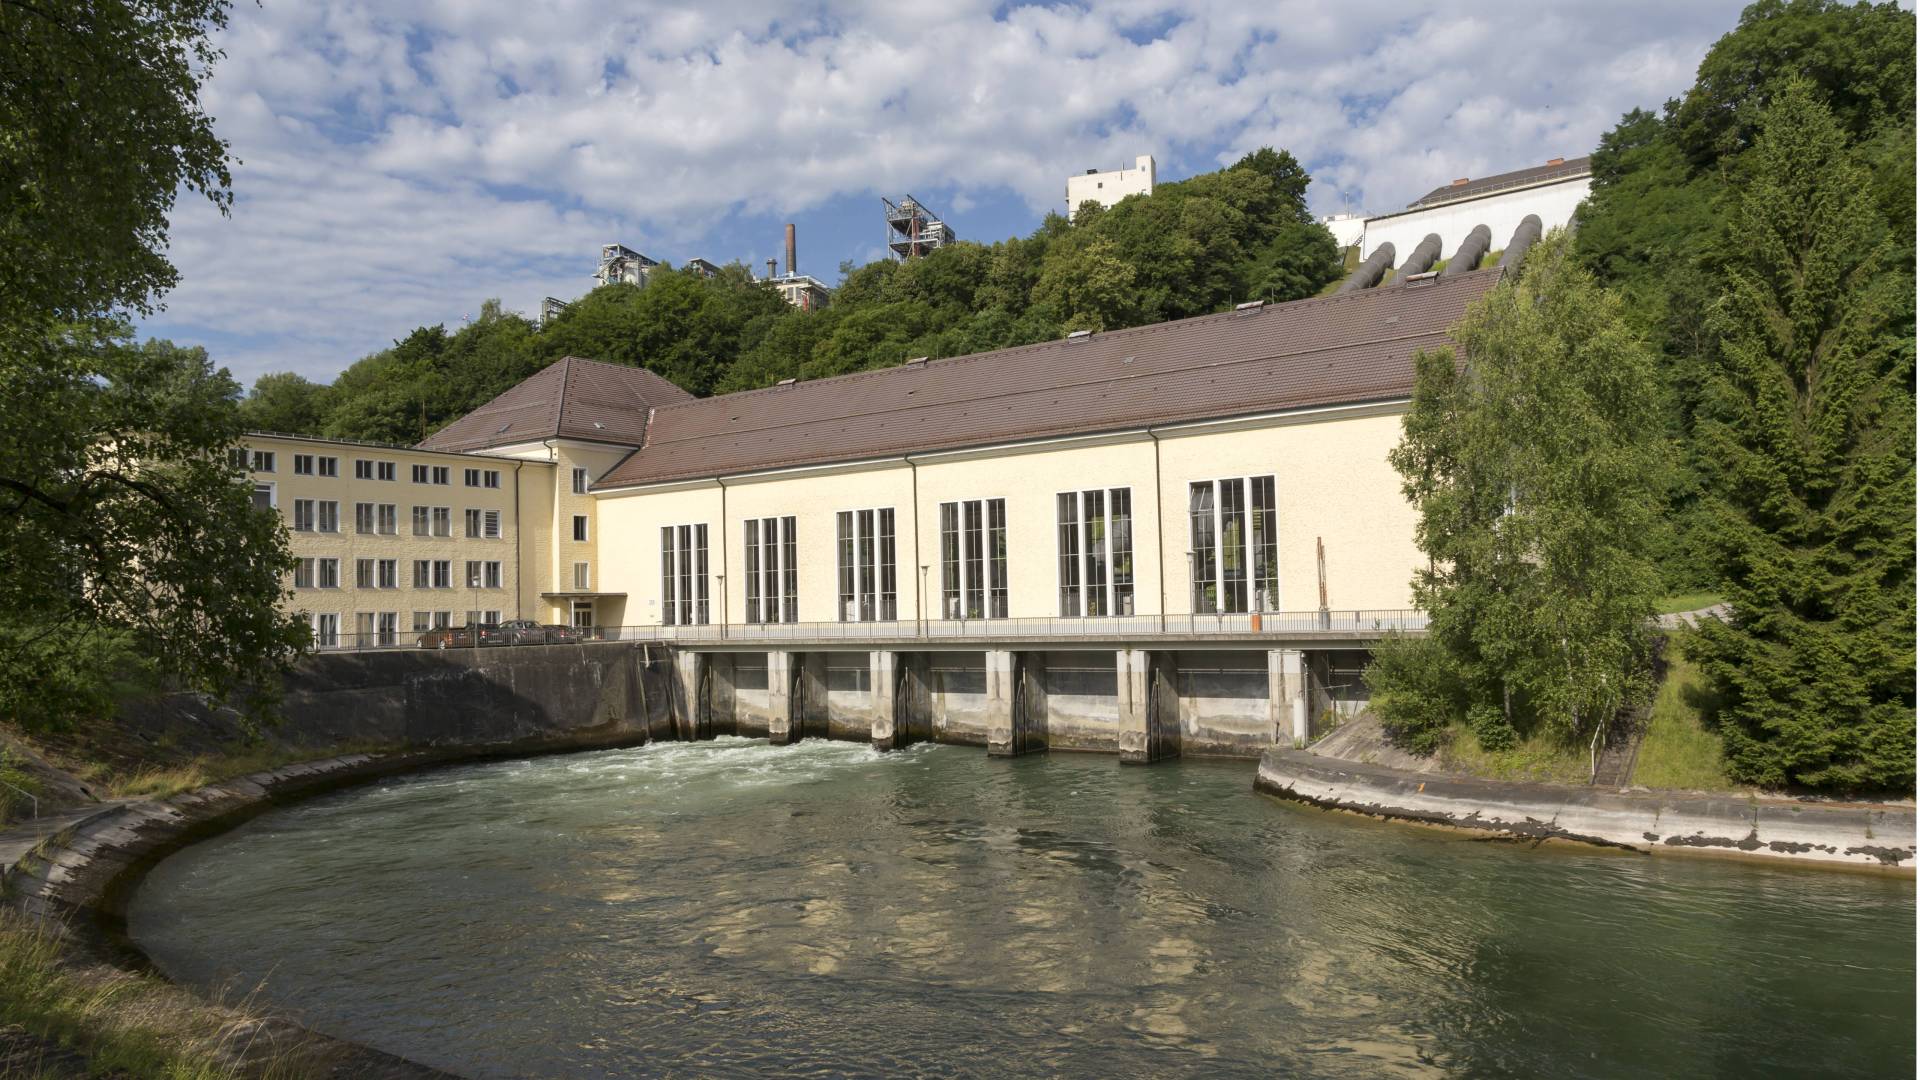 Alzwerke hydroelectric facility in Burghausen